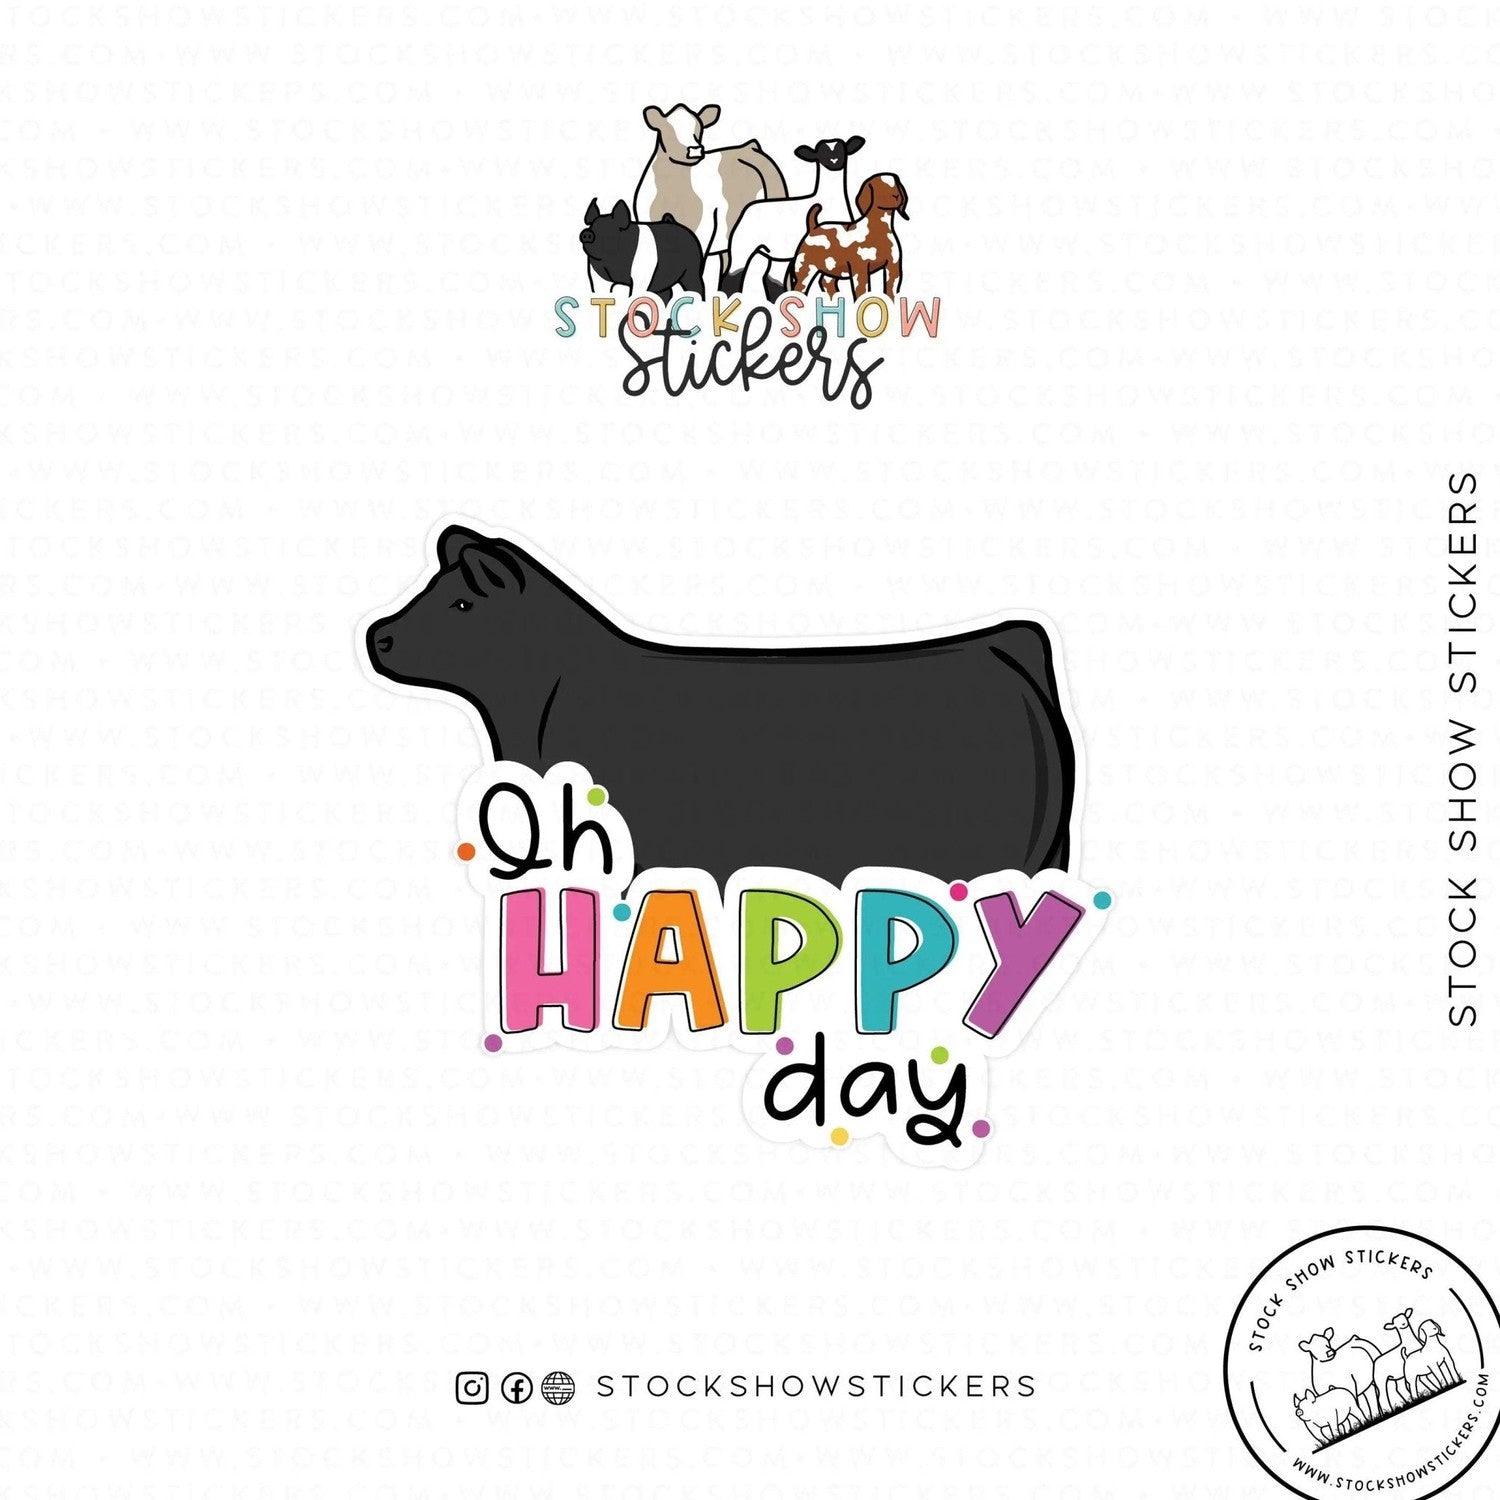 Custom Made Oh Happy Day Livestock Stickers Stock Show Livestock - Livestock &amp; Co. Boutique